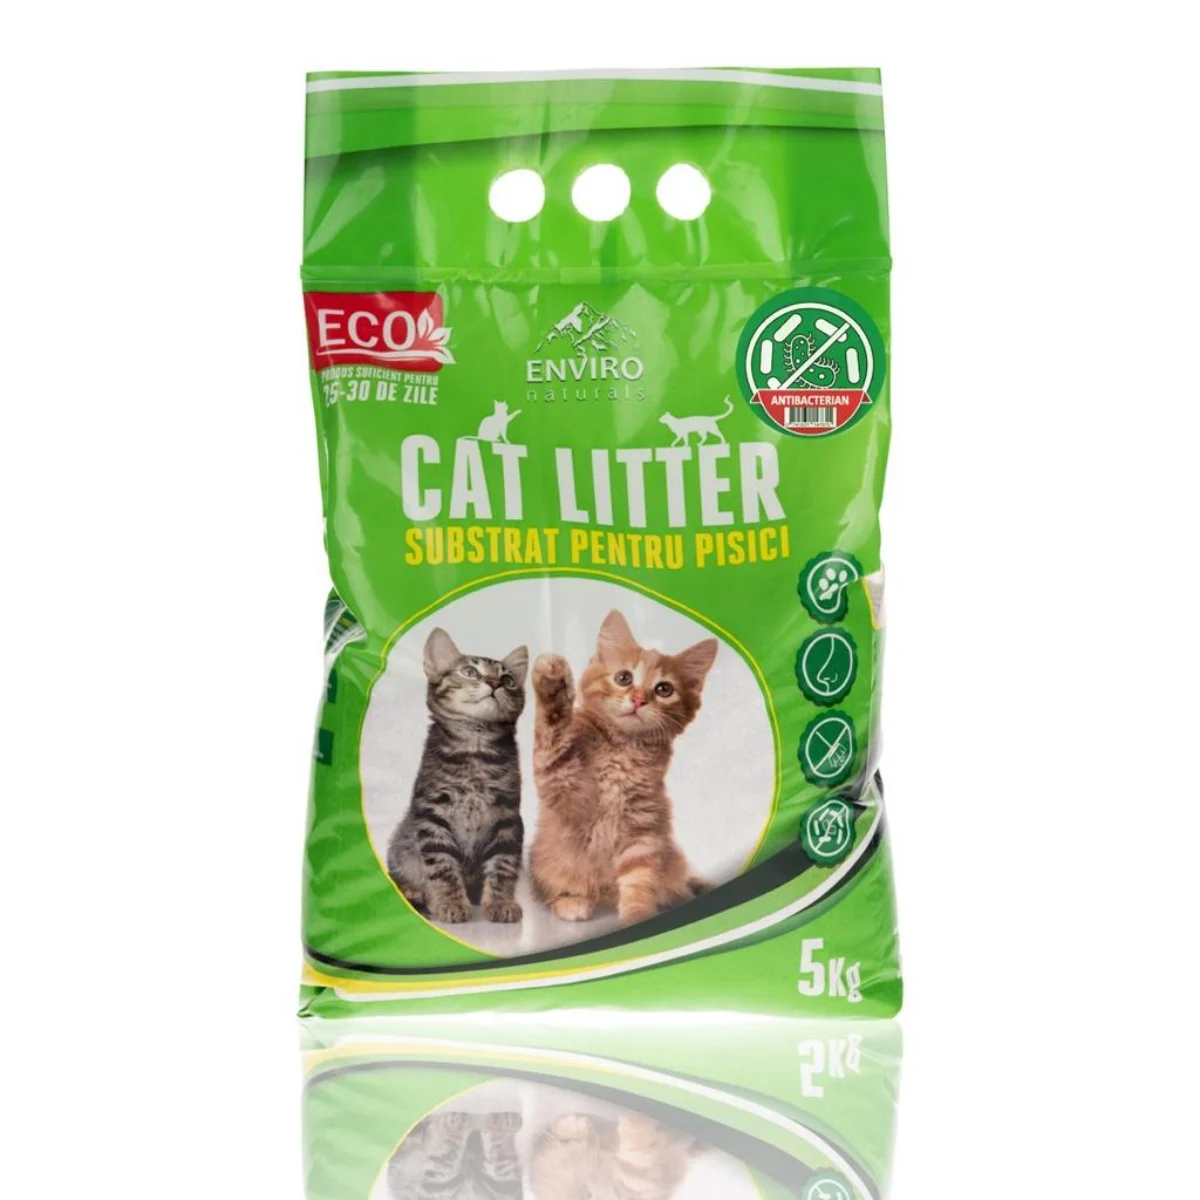 Zeolit substrat pentru pisici Cat litter 5 Kg [1]